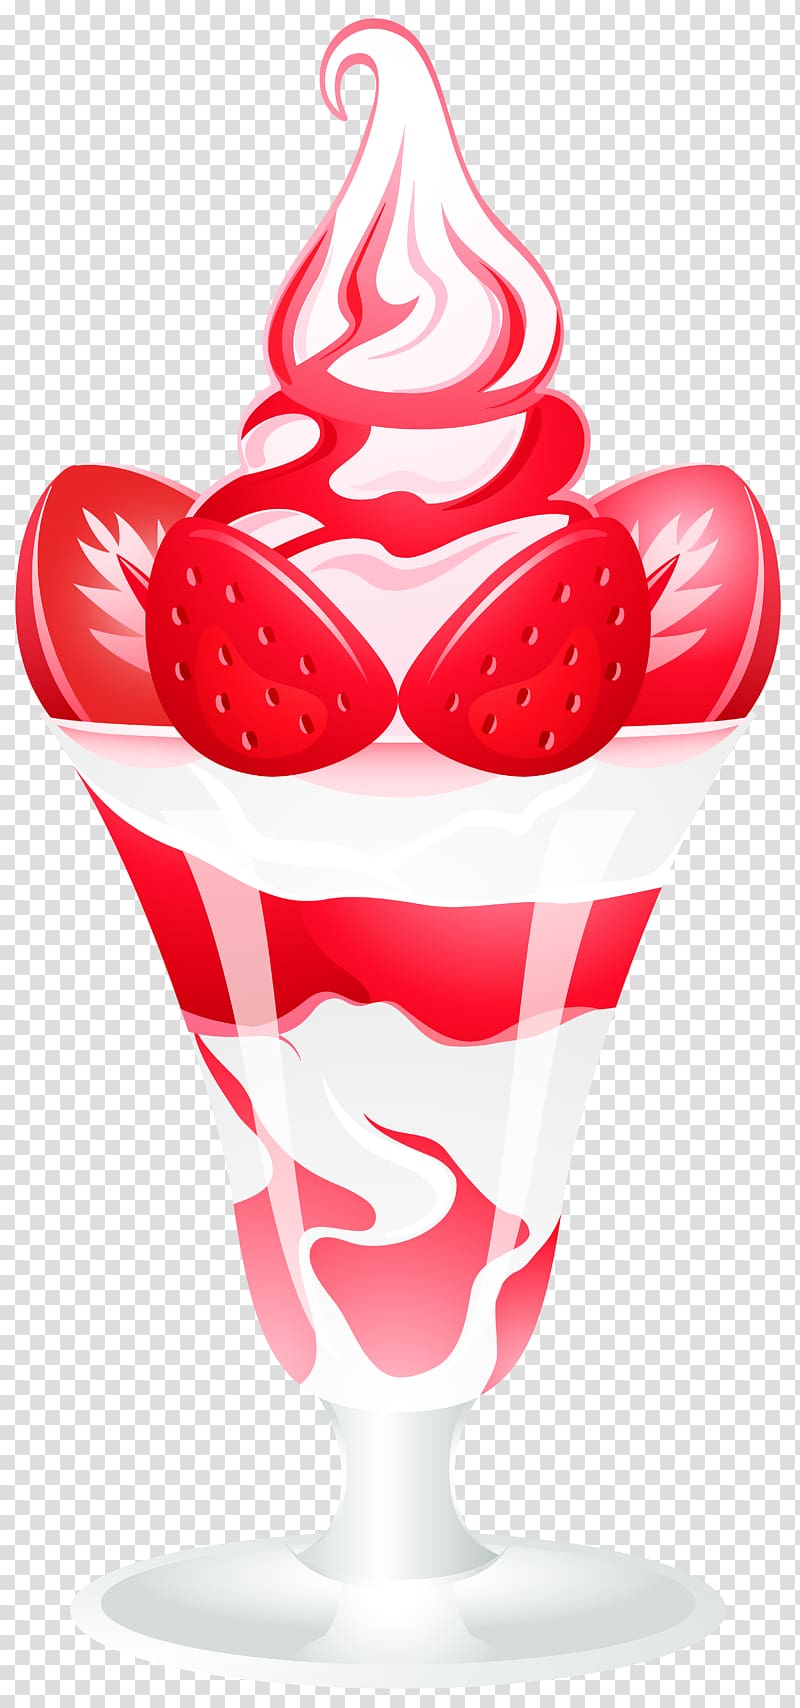 strawberry shake , Ice cream cone Sundae Strawberry ice cream, Ice Cream Sundae with Strawberries t transparent background PNG clipart